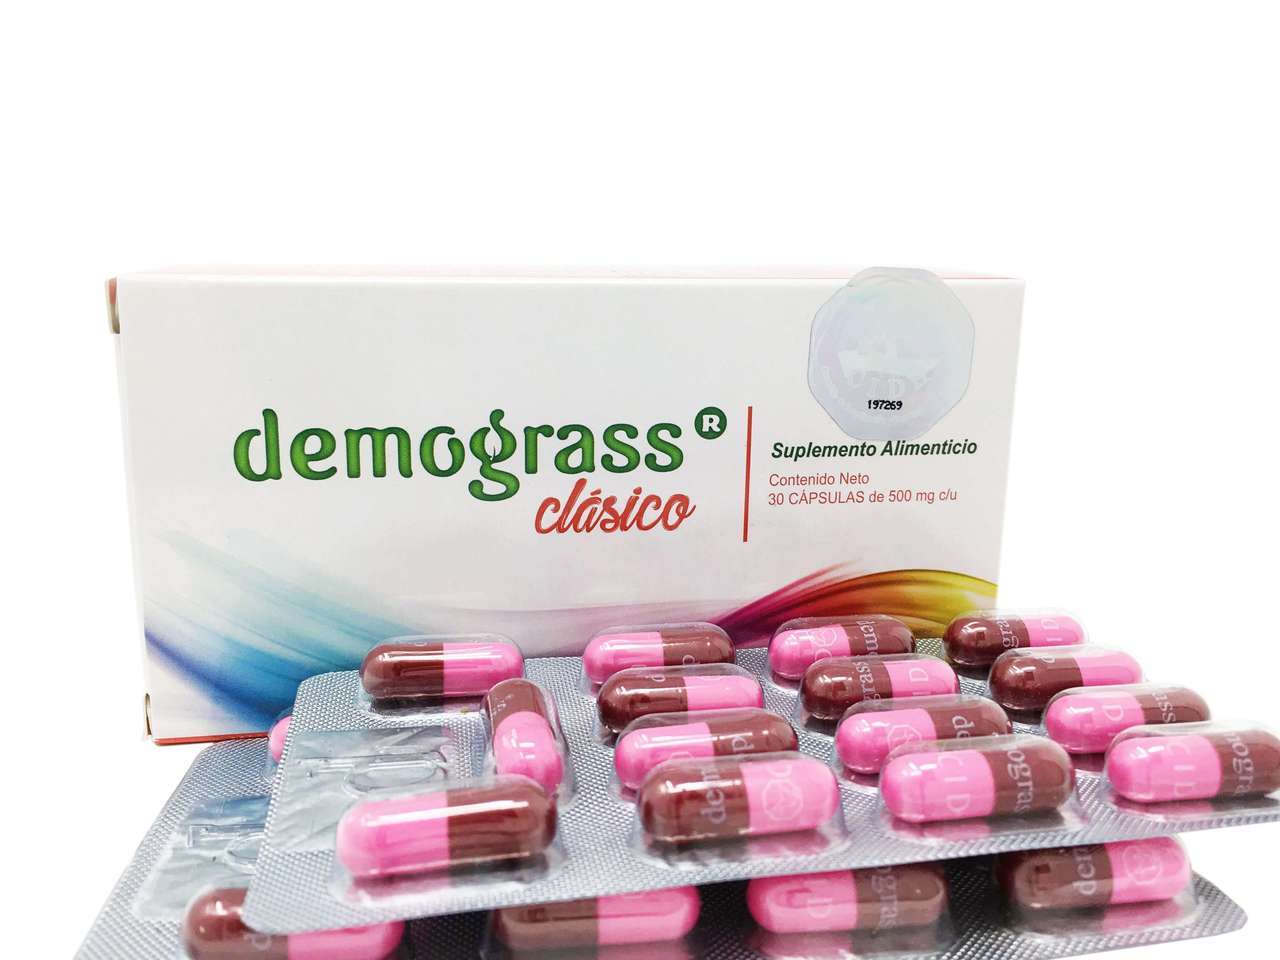 Demograss clasico donde comprar, testimonios, funciona? precios 2022